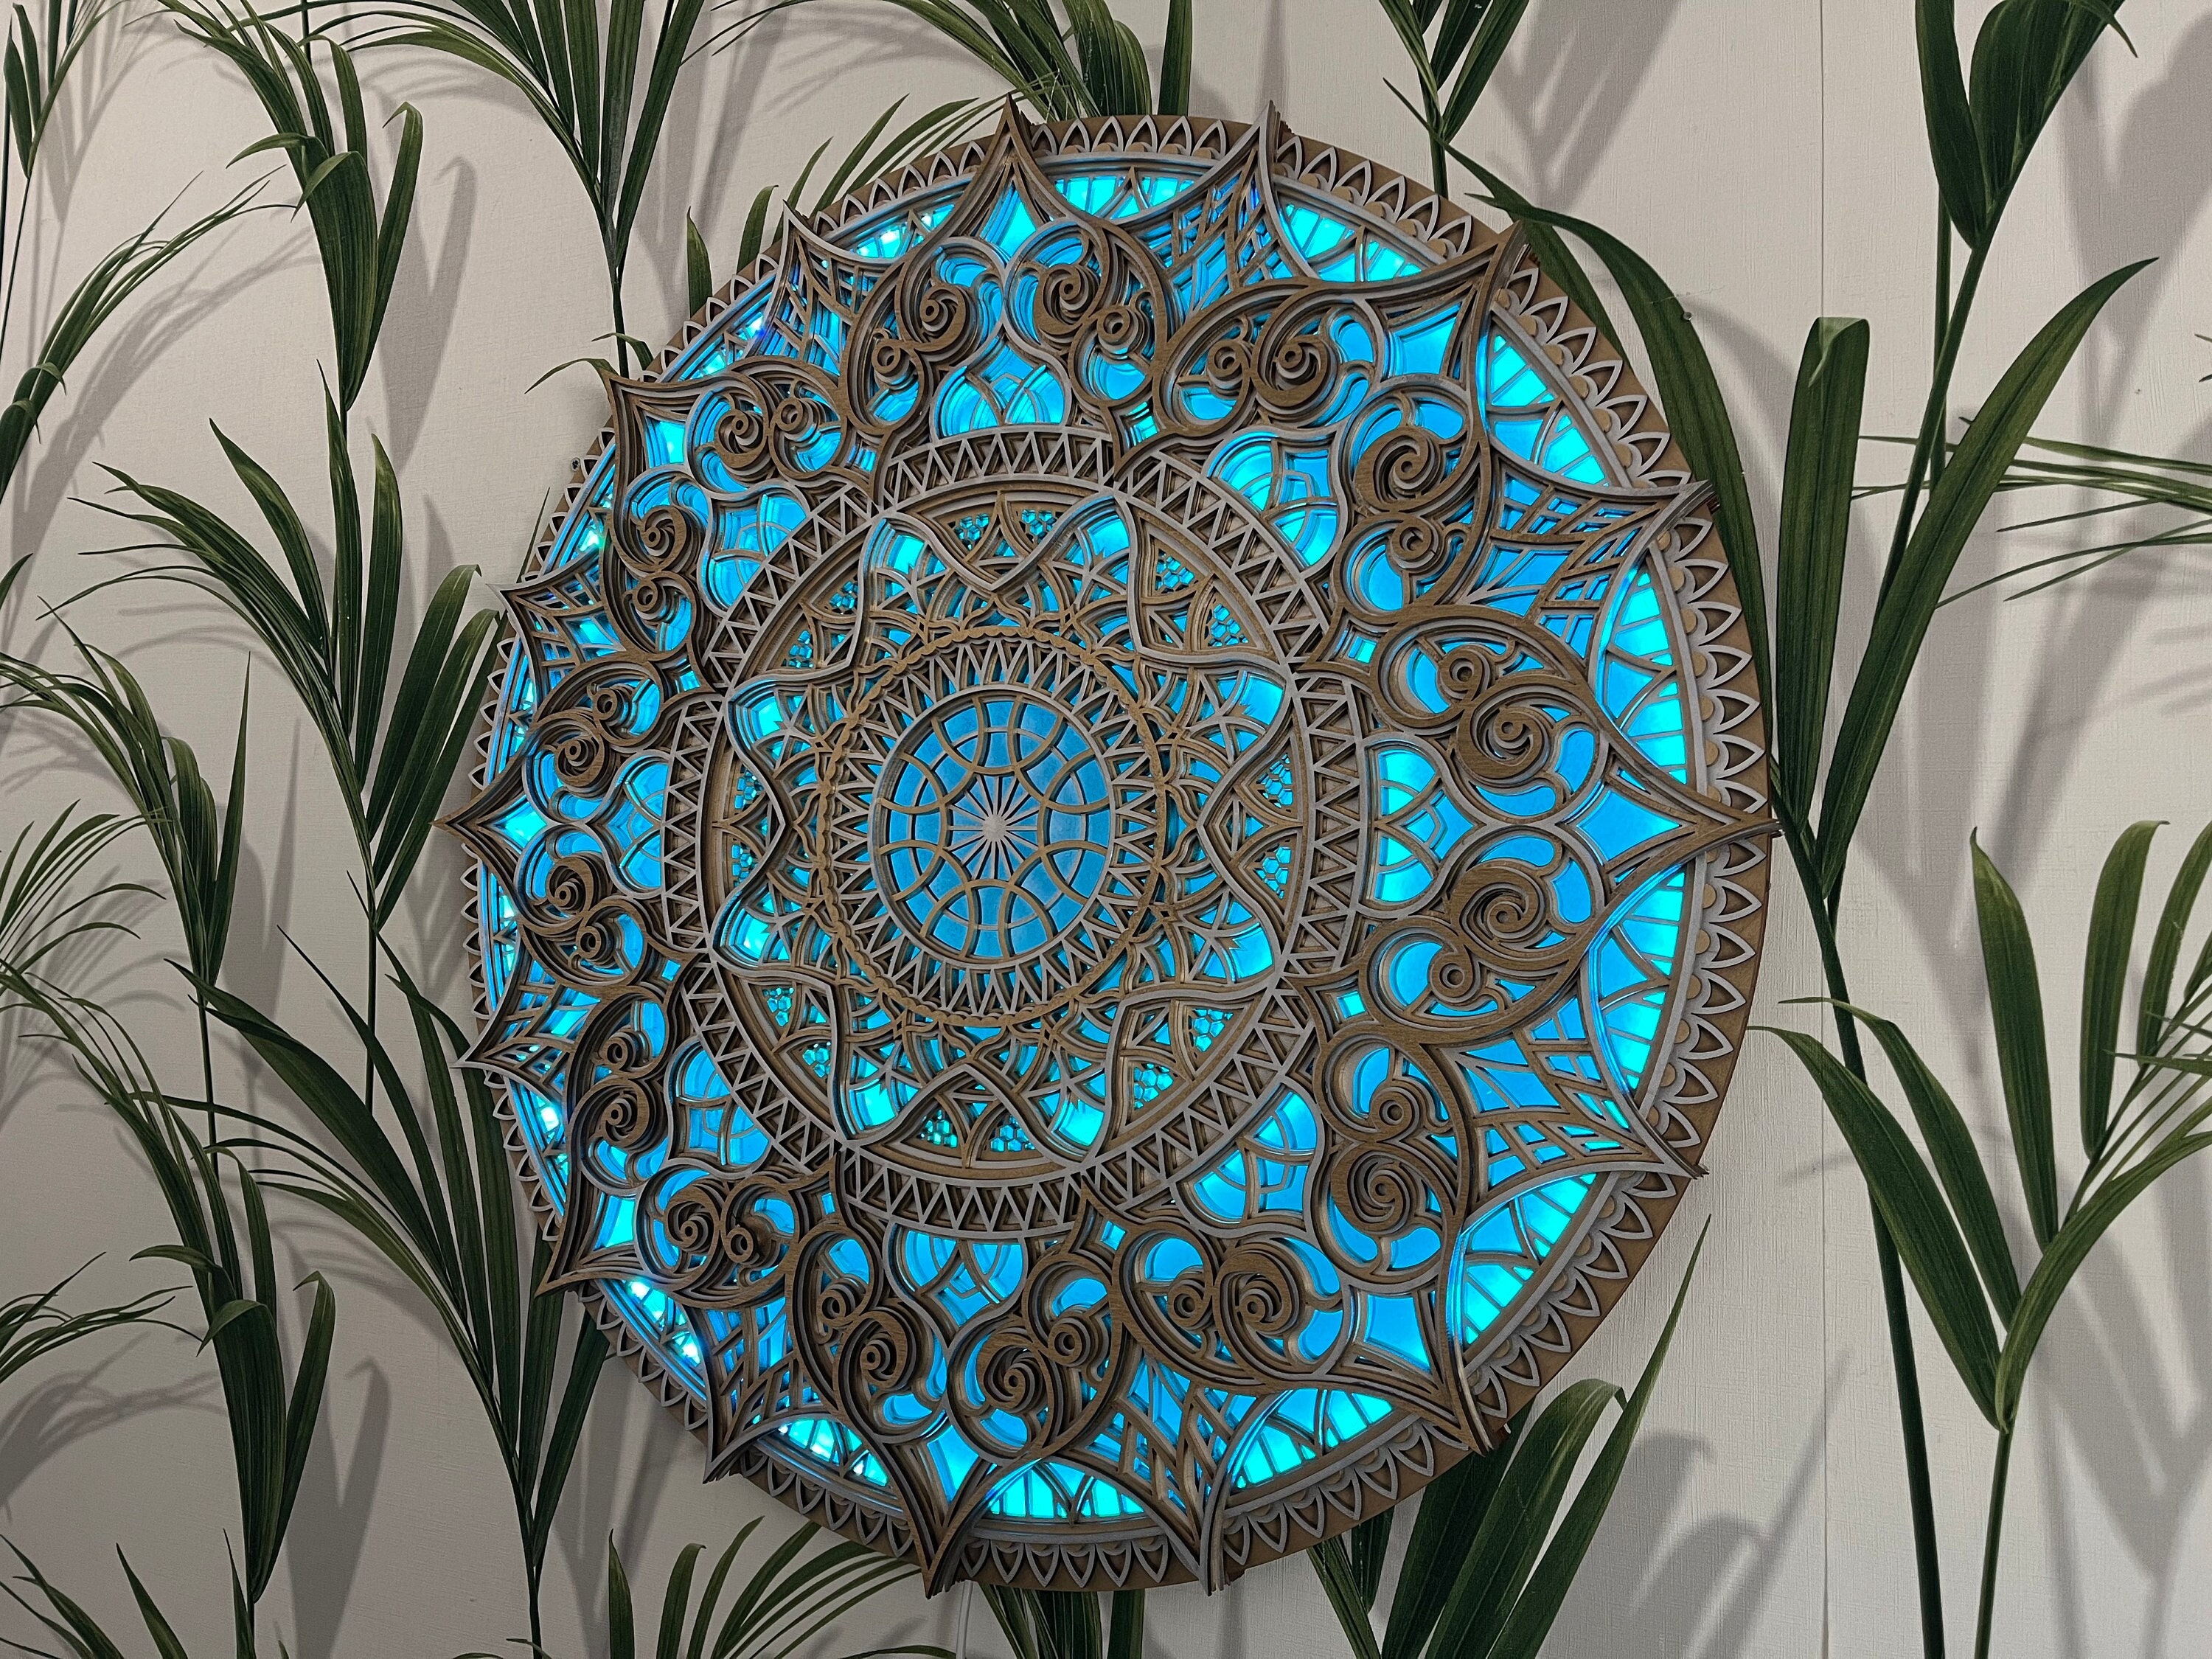 Wood Shadow Lamp, Mandala Decor for Shelf, Geometric Lantern